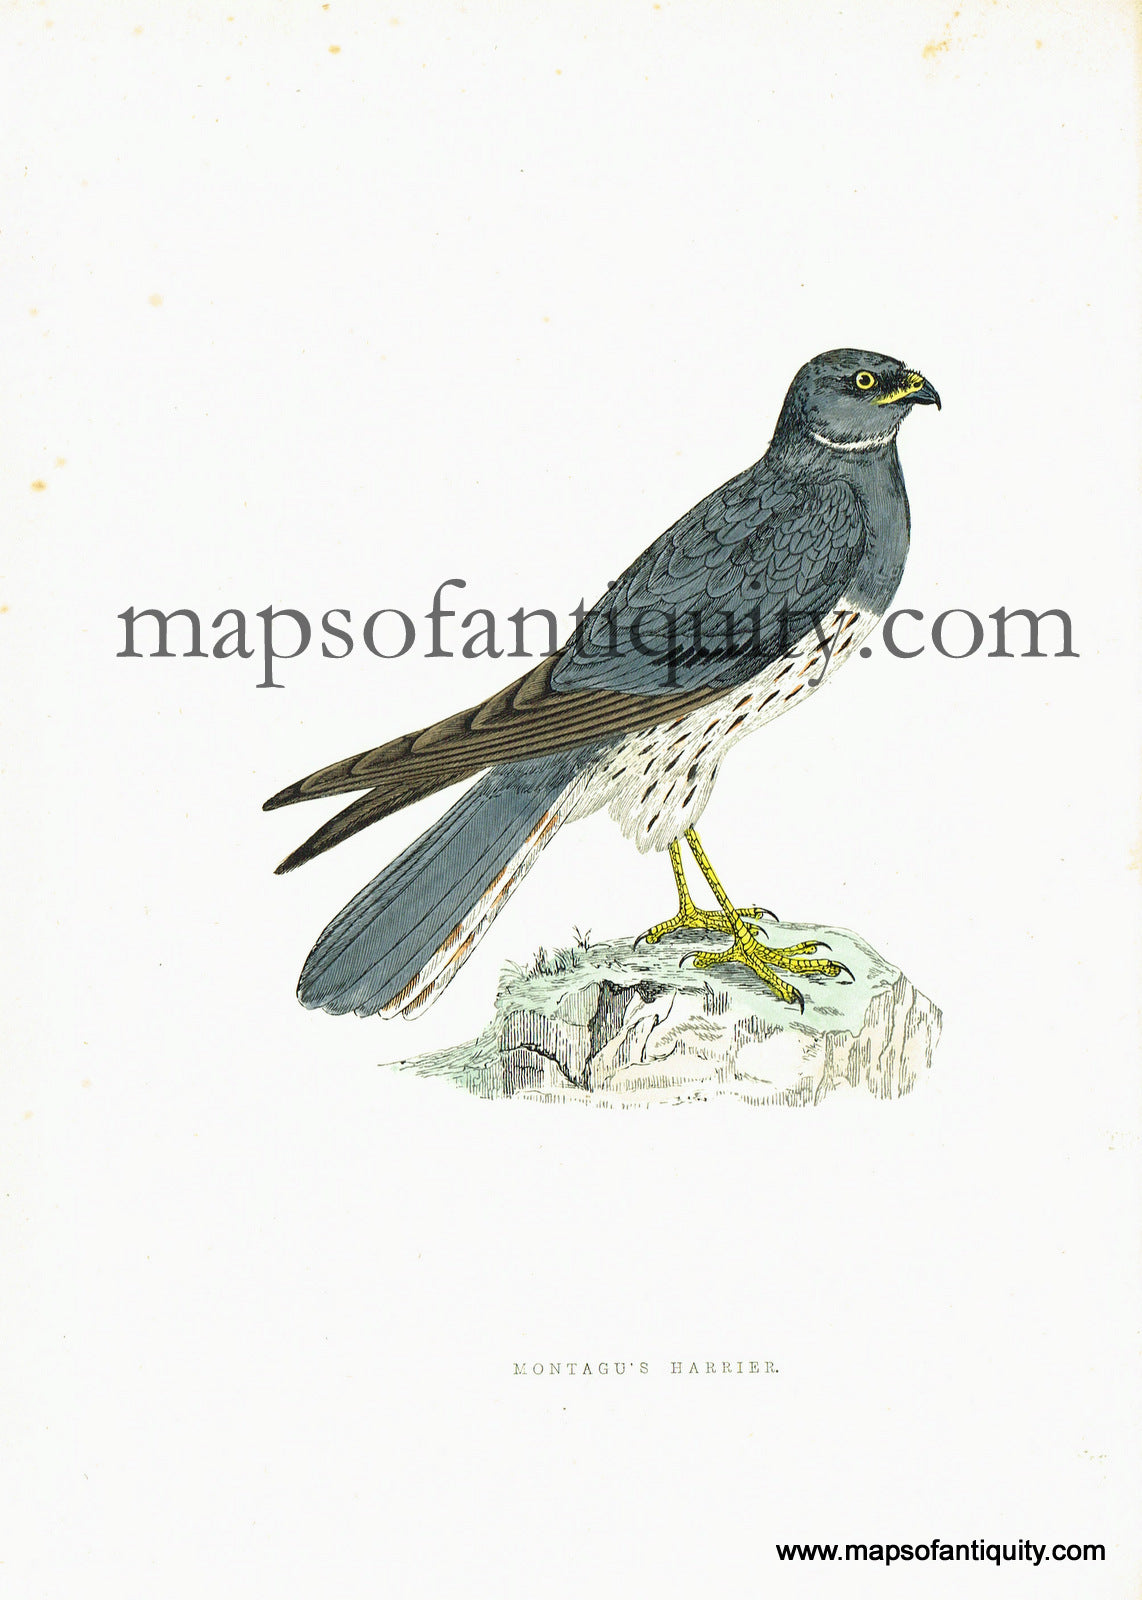 Antique-Hand-Colored-Engraved-Illustration-Montagu's-Harrier-Antique-Prints-Natural-History-Birds-c.-1880-Morris-Maps-Of-Antiquity